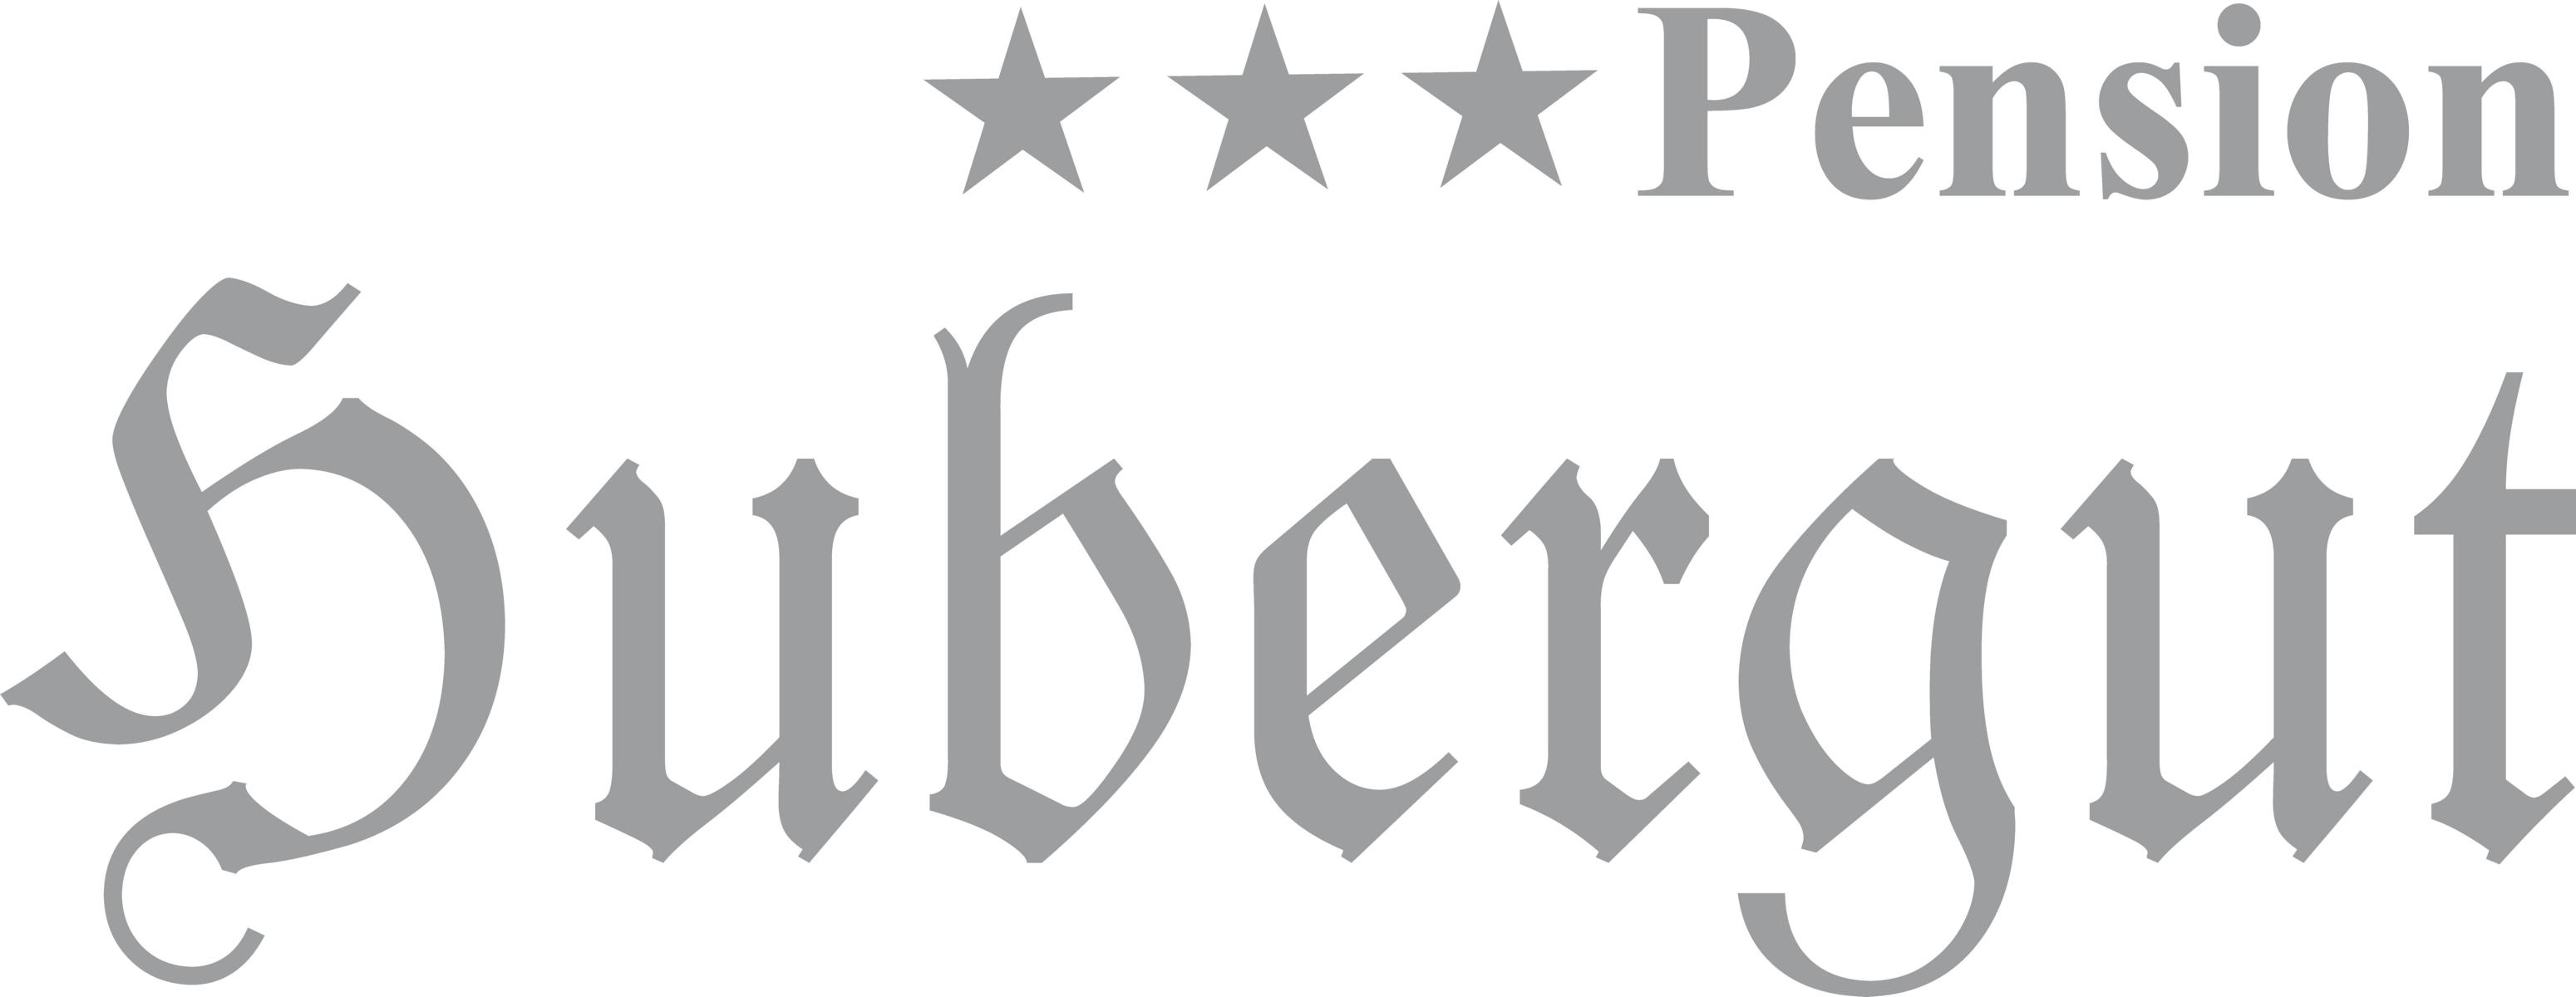 Hubergut Logo